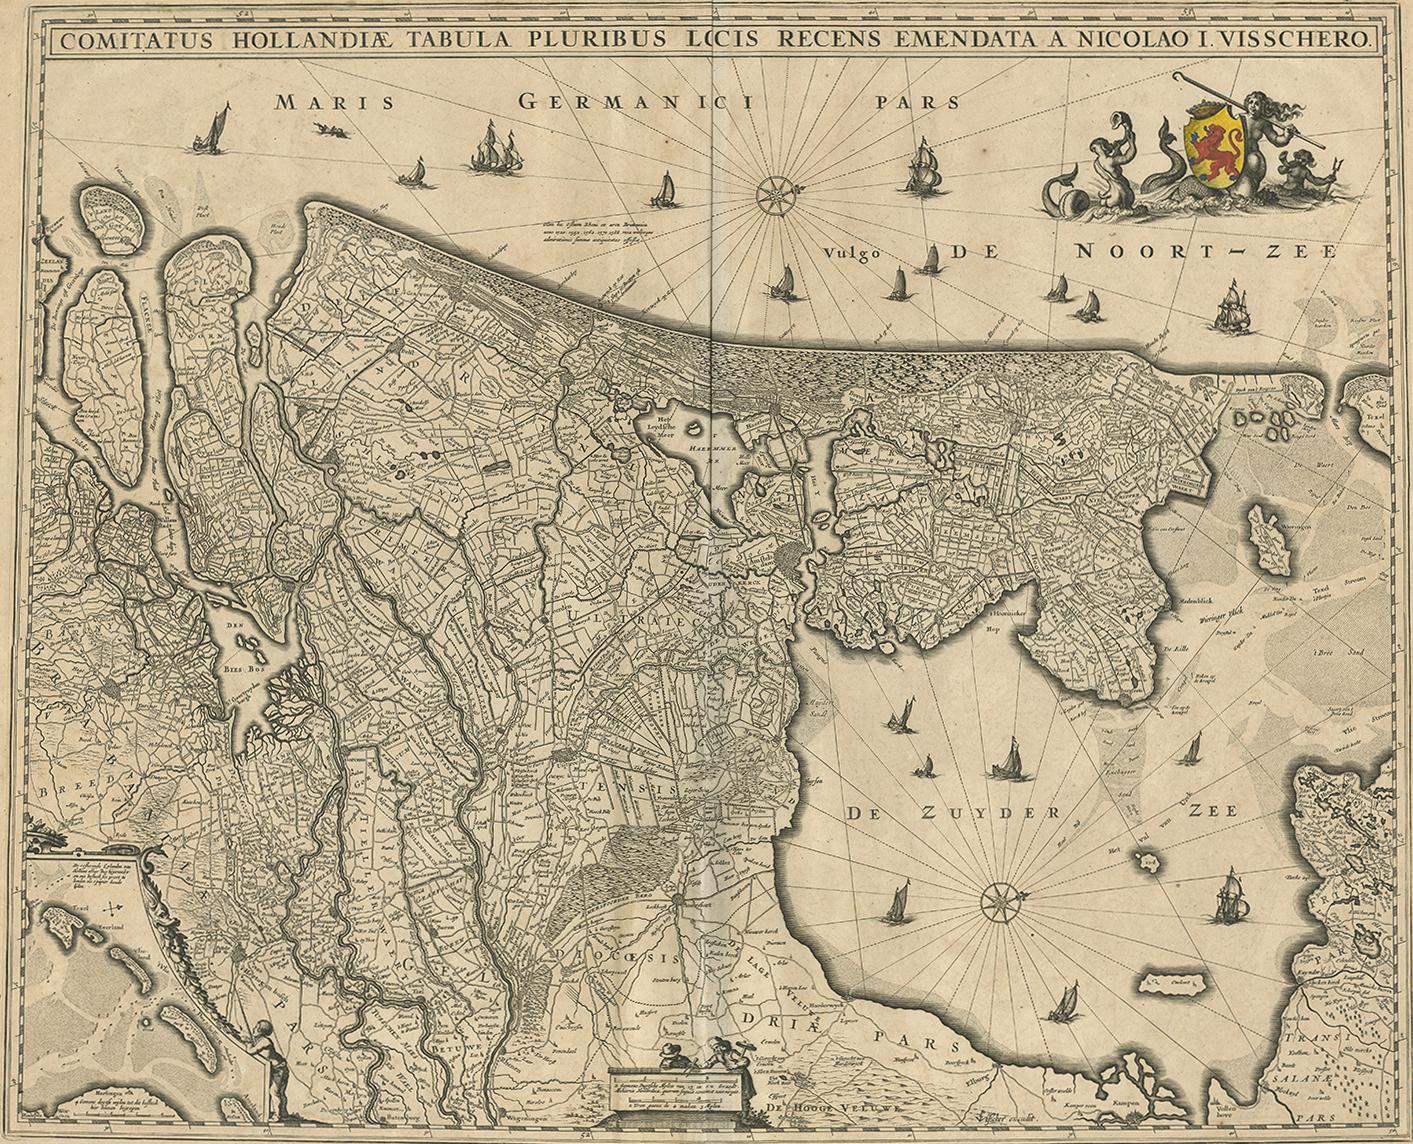 Antique map titled 'Comitatus Hollandiae Tabula Pluribus Locis Recens Emendata a Nicolao I. Visschero'. West to the top. Lower left inset of the Wadden Islands, Texel, Vlieland, Terschelling and part of Ameland. This map originates from 'N.